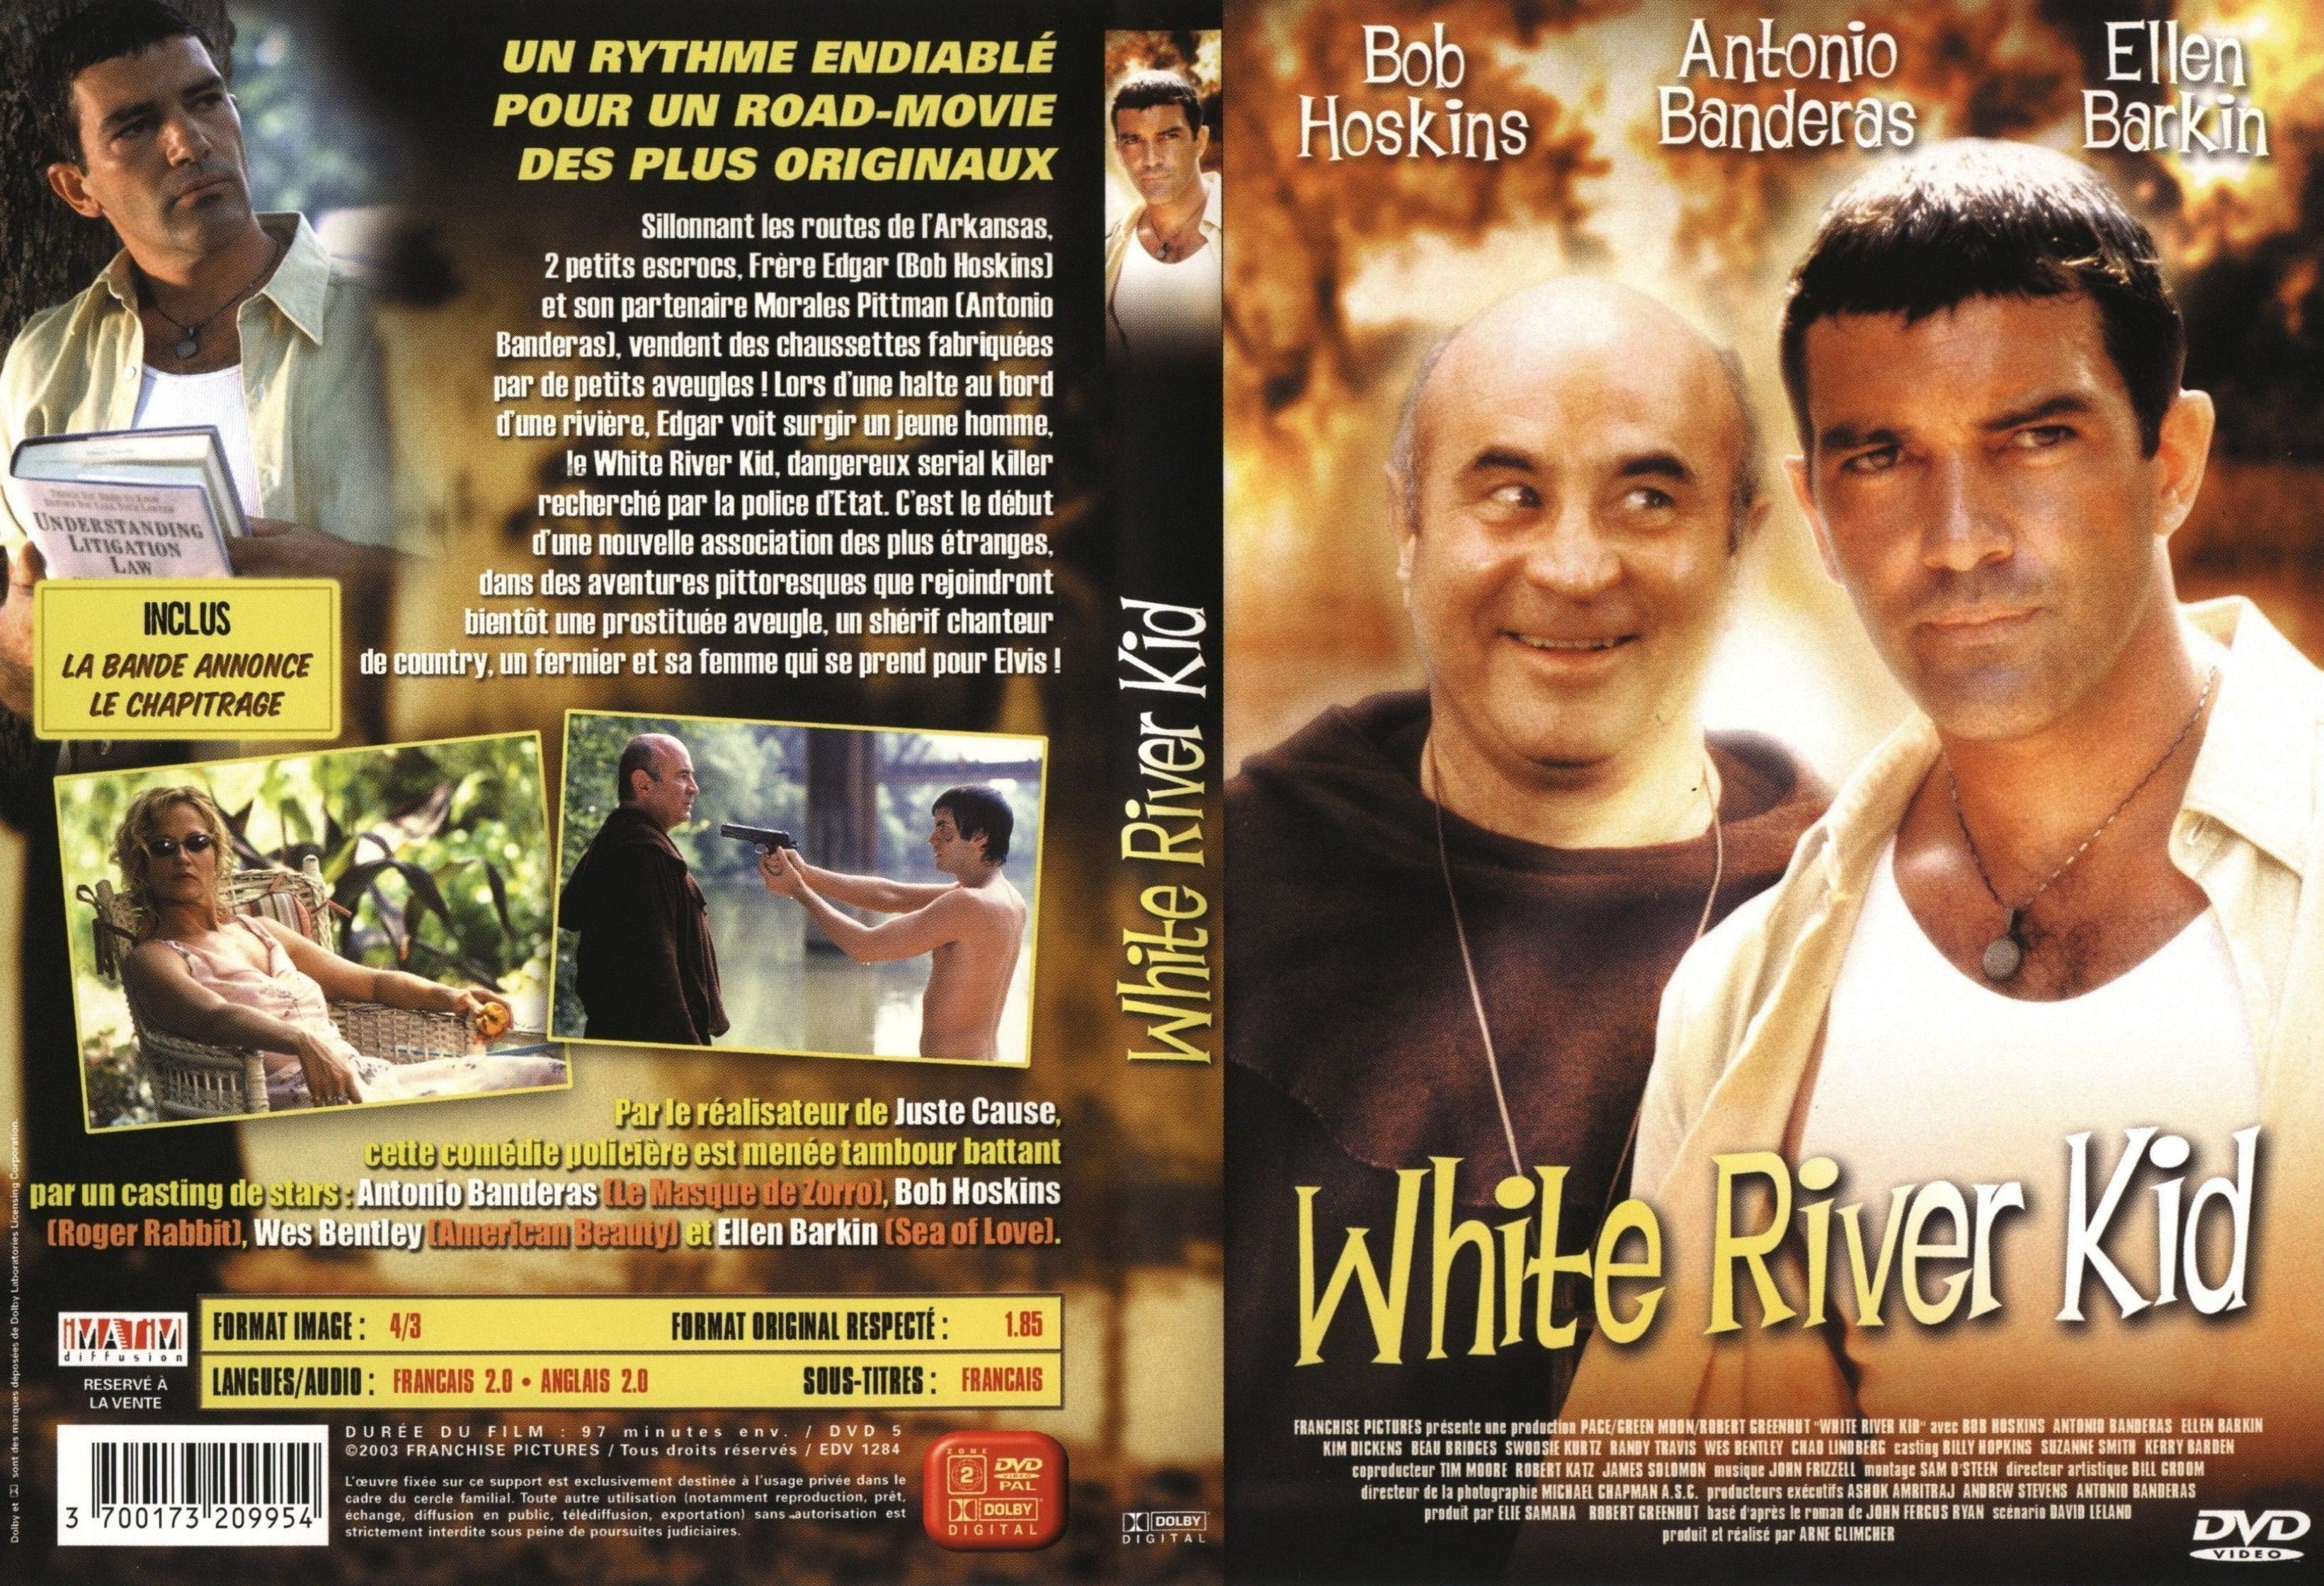 Jaquette DVD White river kid